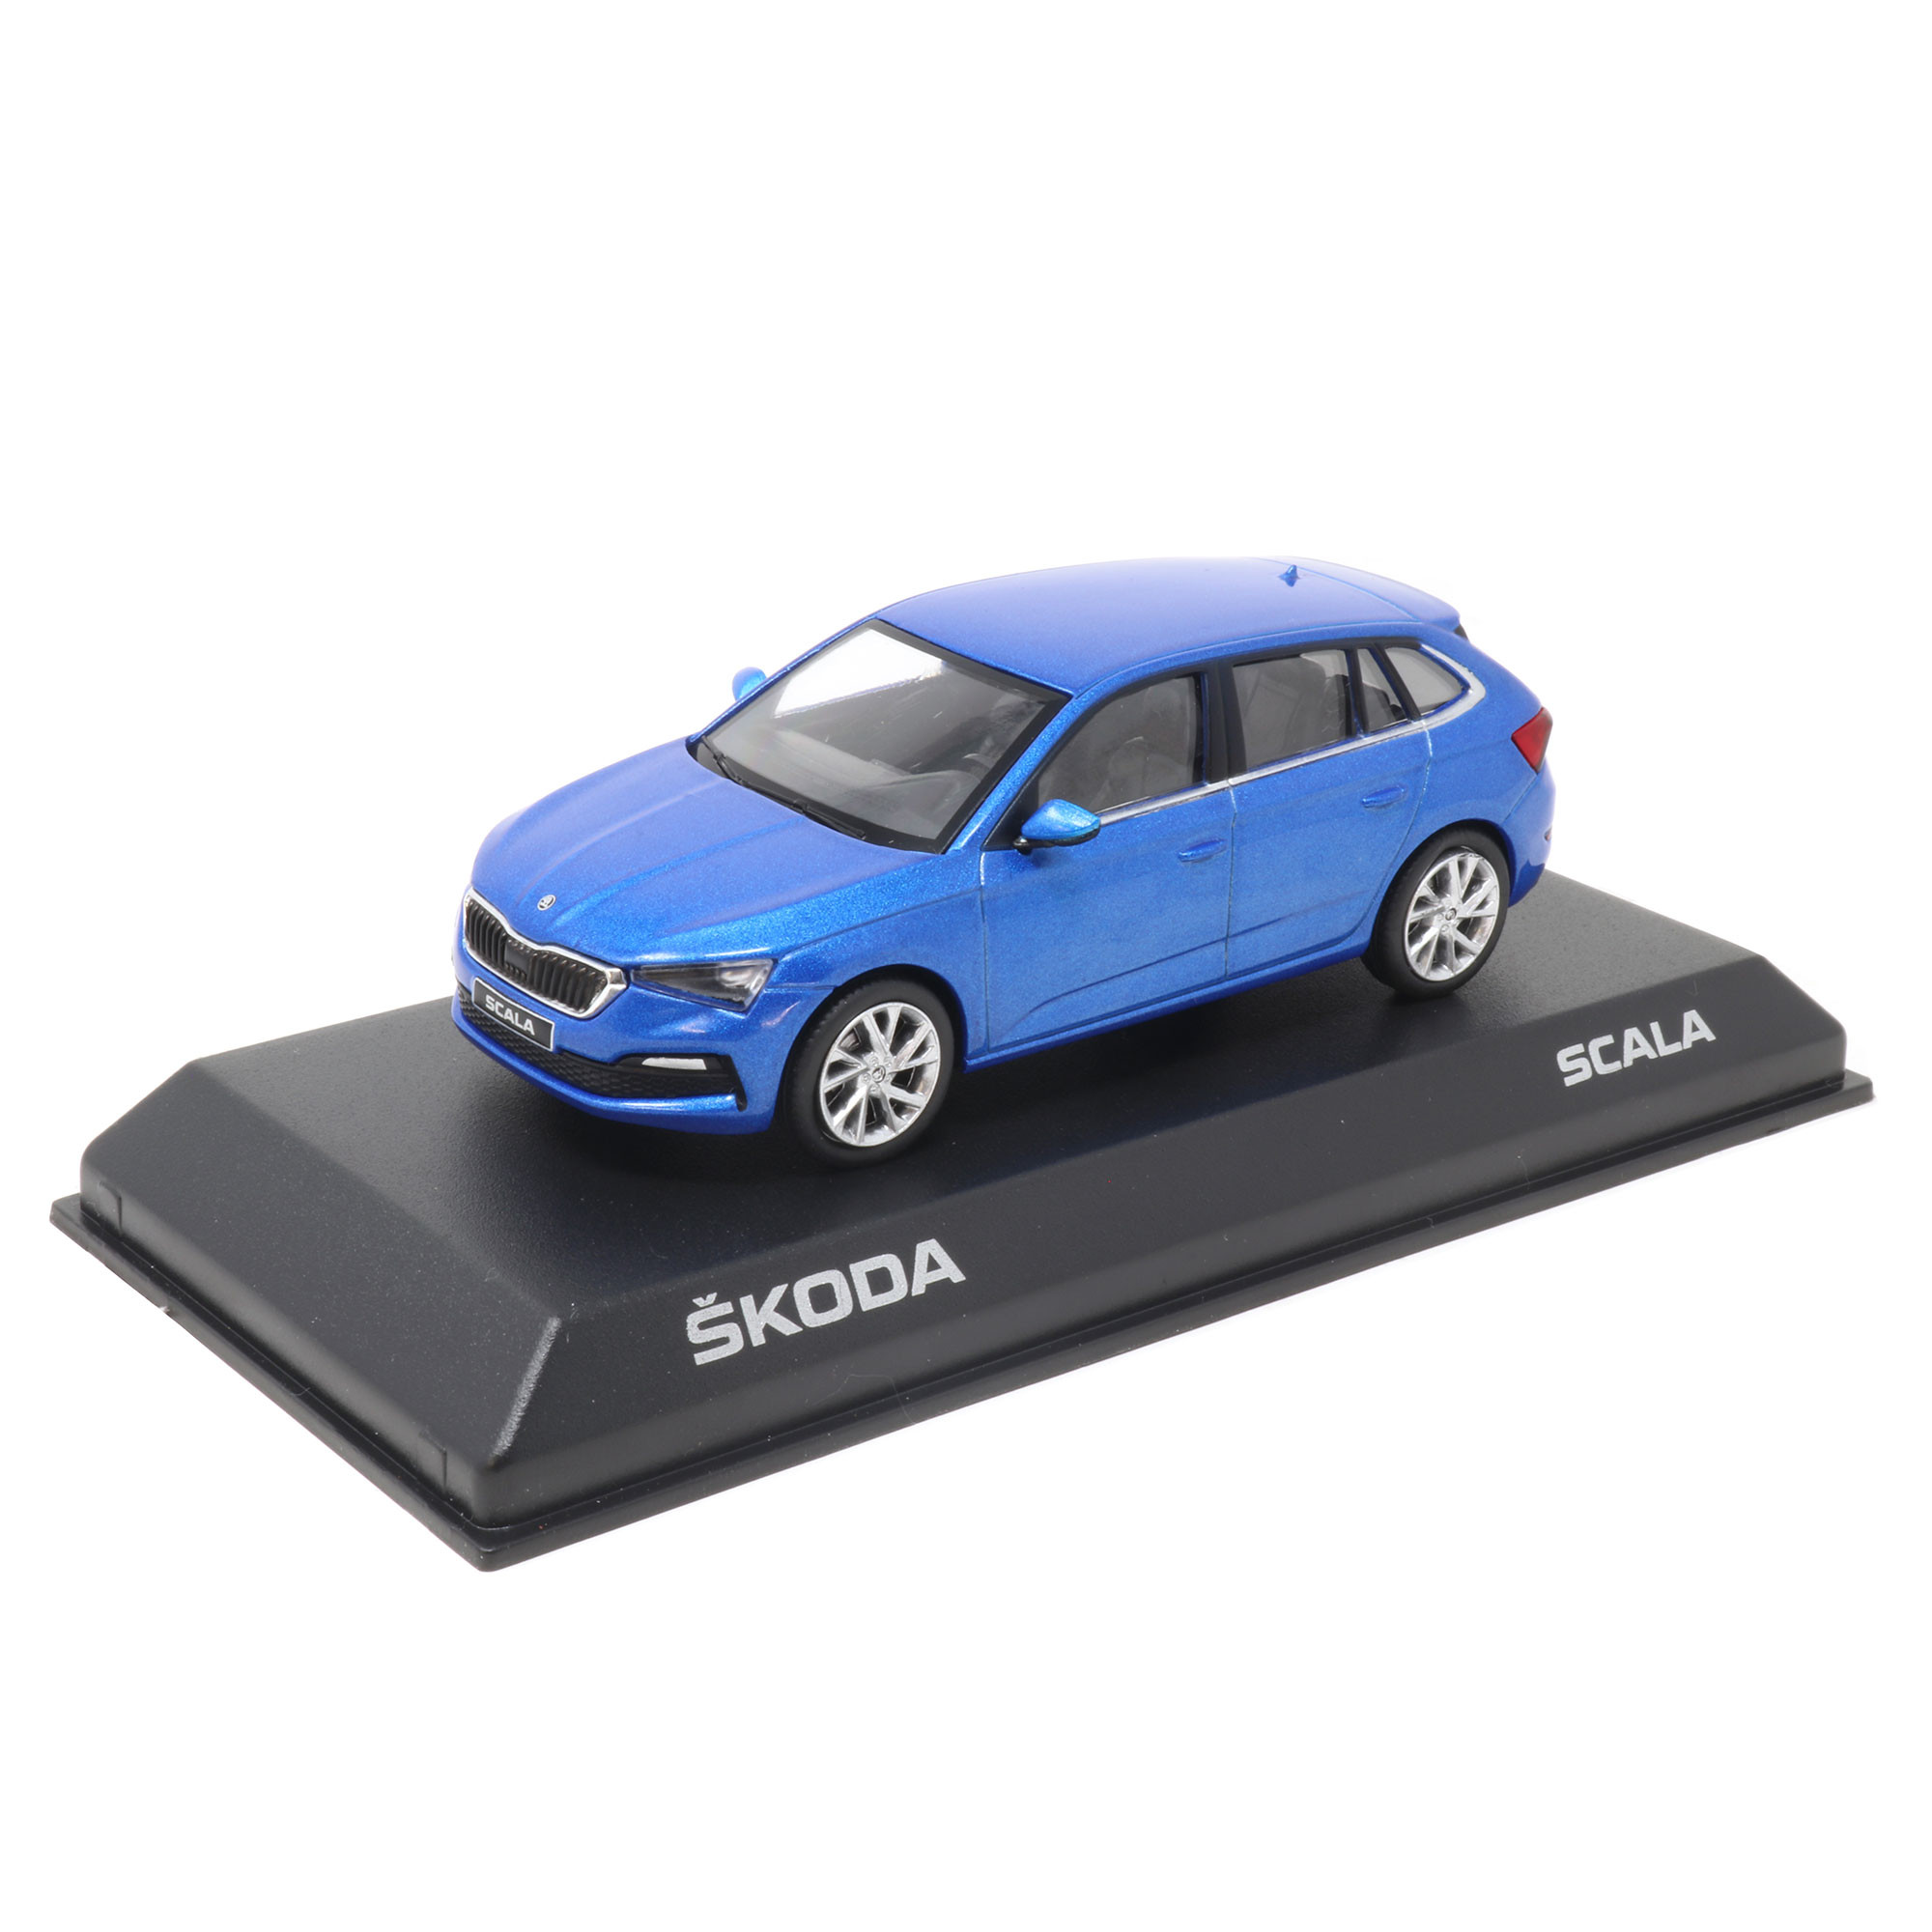 Skoda Scala 1:43 Modellauto Race Blau 657099300 F5W Miniatur